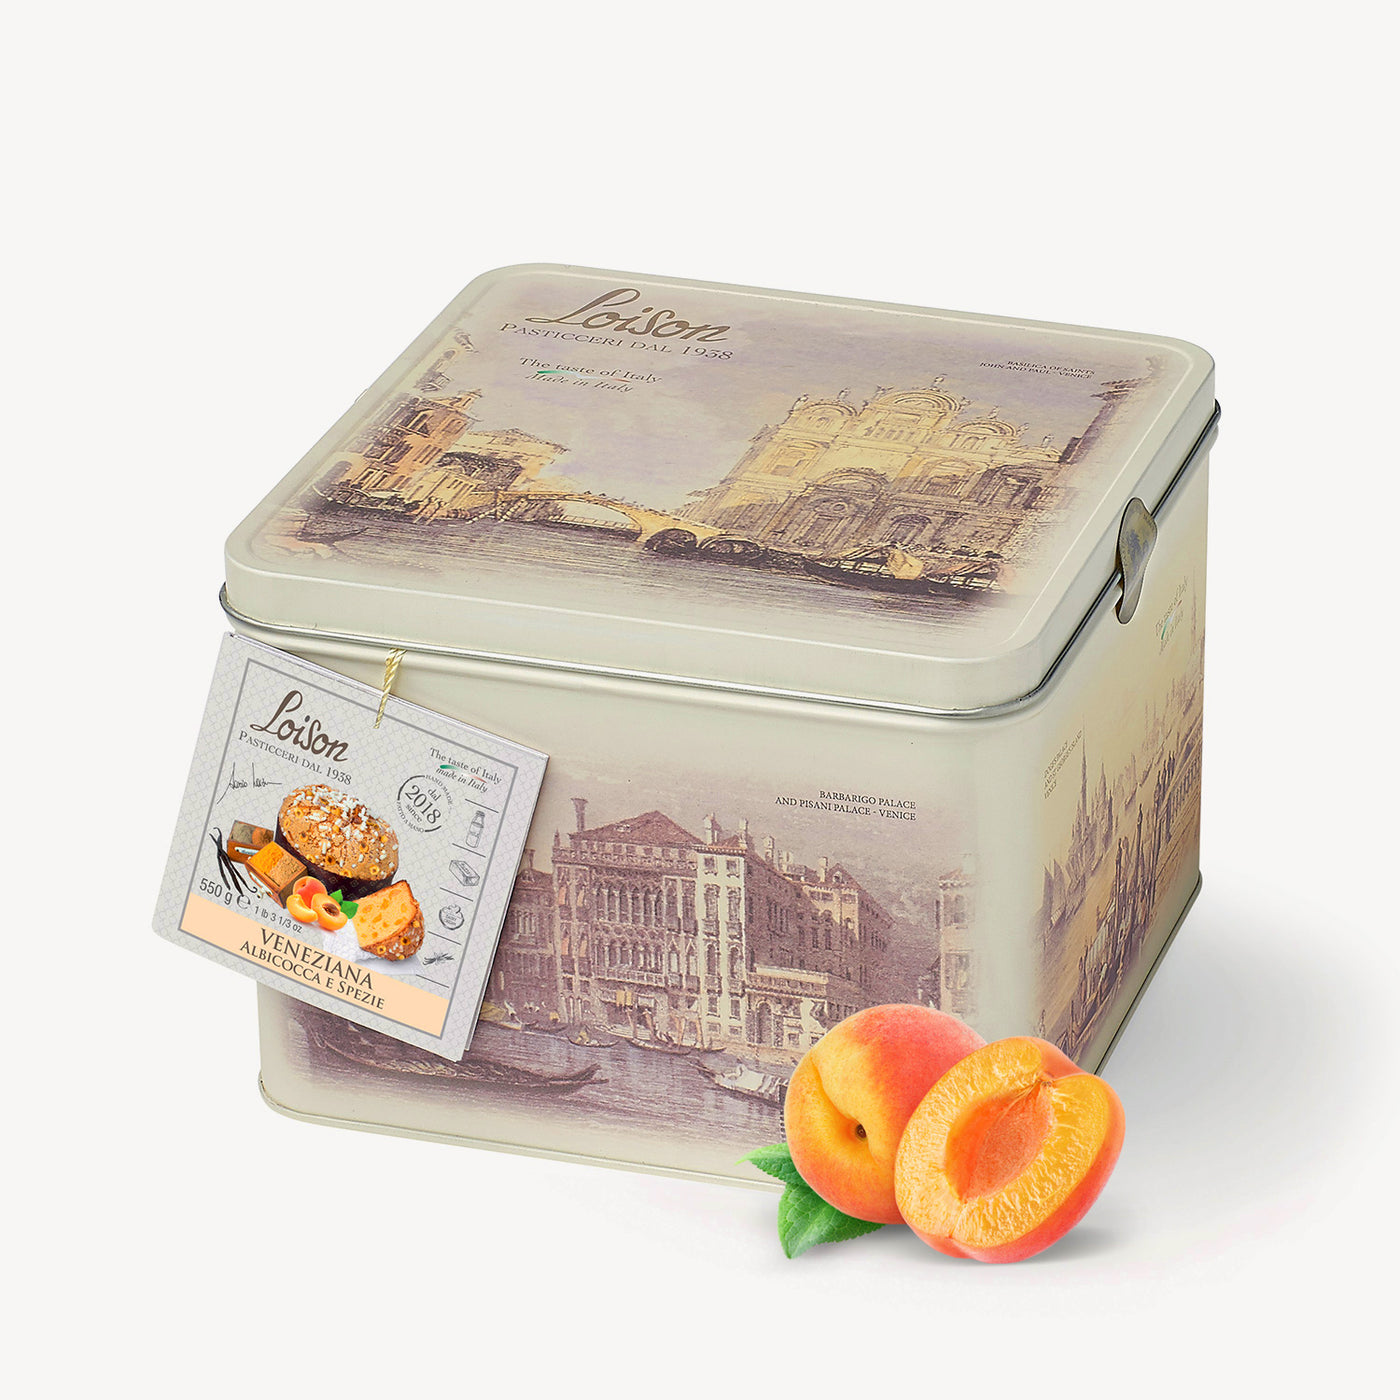 Apricot and Spices Veneziana in Thin Box